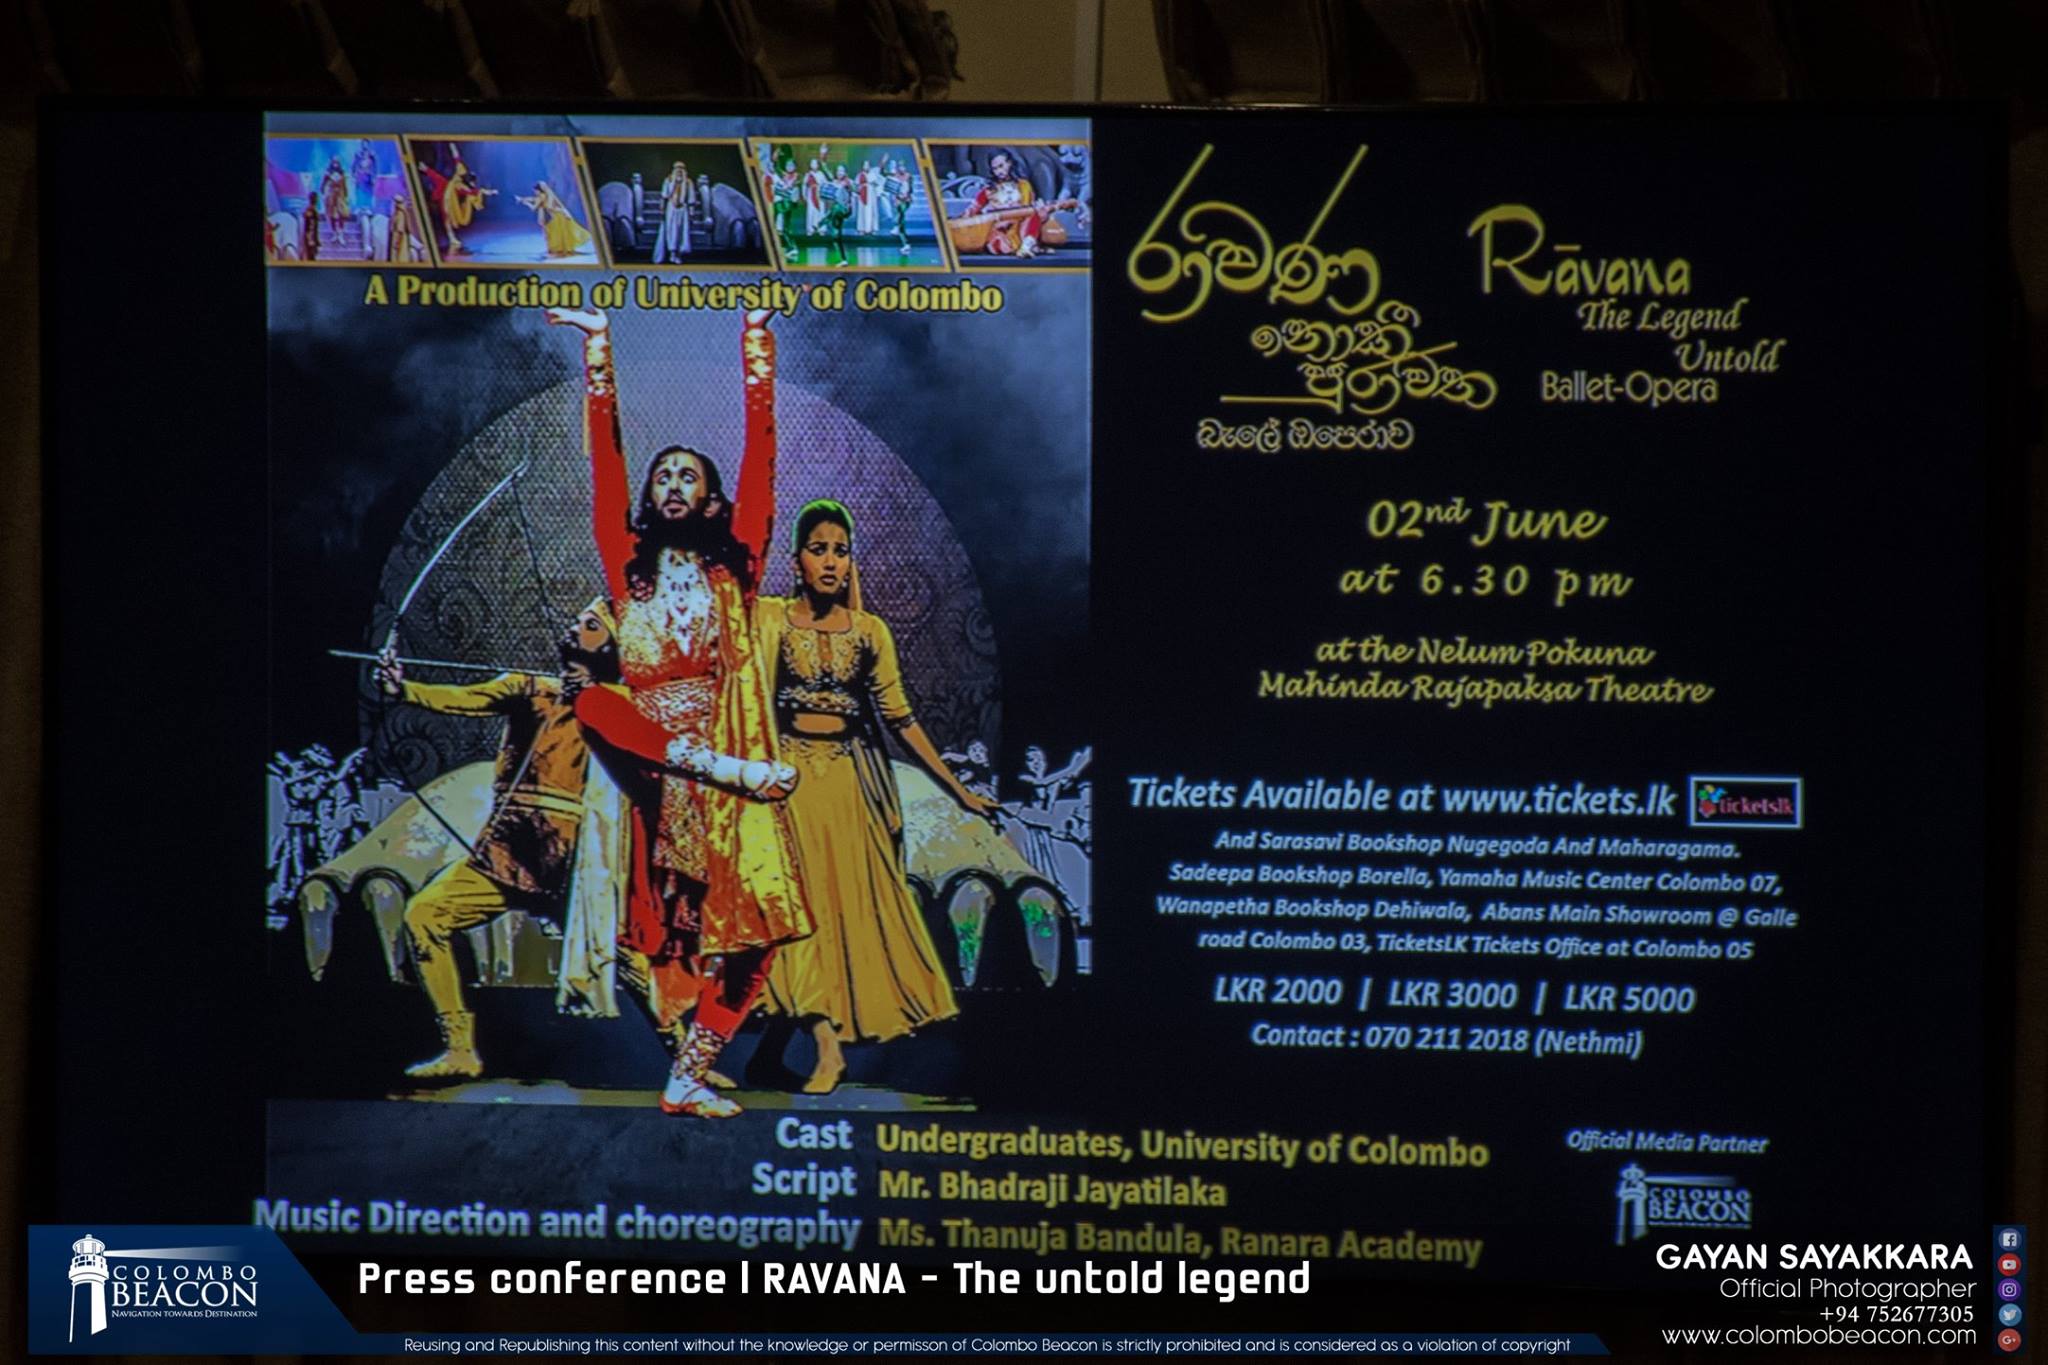 The “Ravana: The Legend Untold” Press Conference